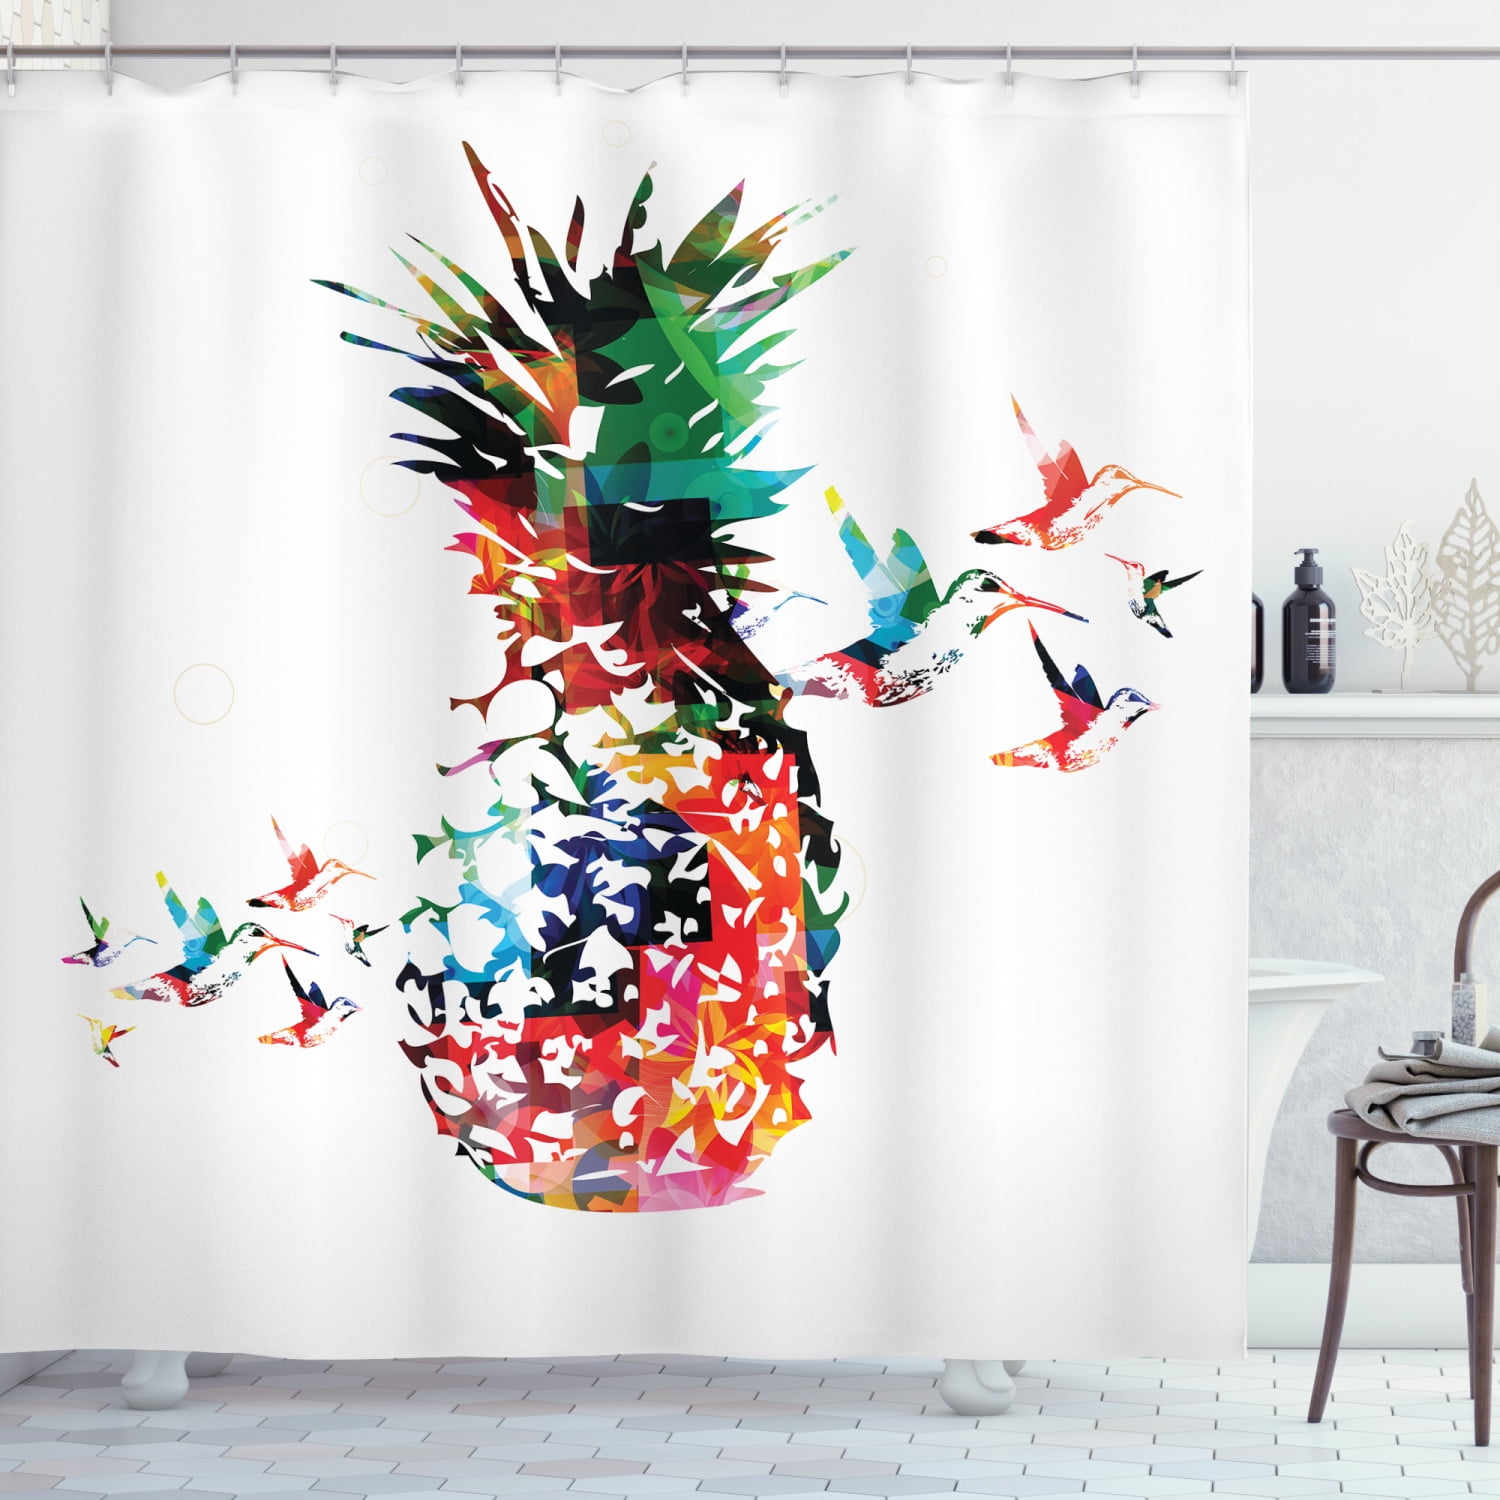 Waterproof Fabric Hooks Bathroom Shower Curtain Pineapple Fruit Bathroom Decor 